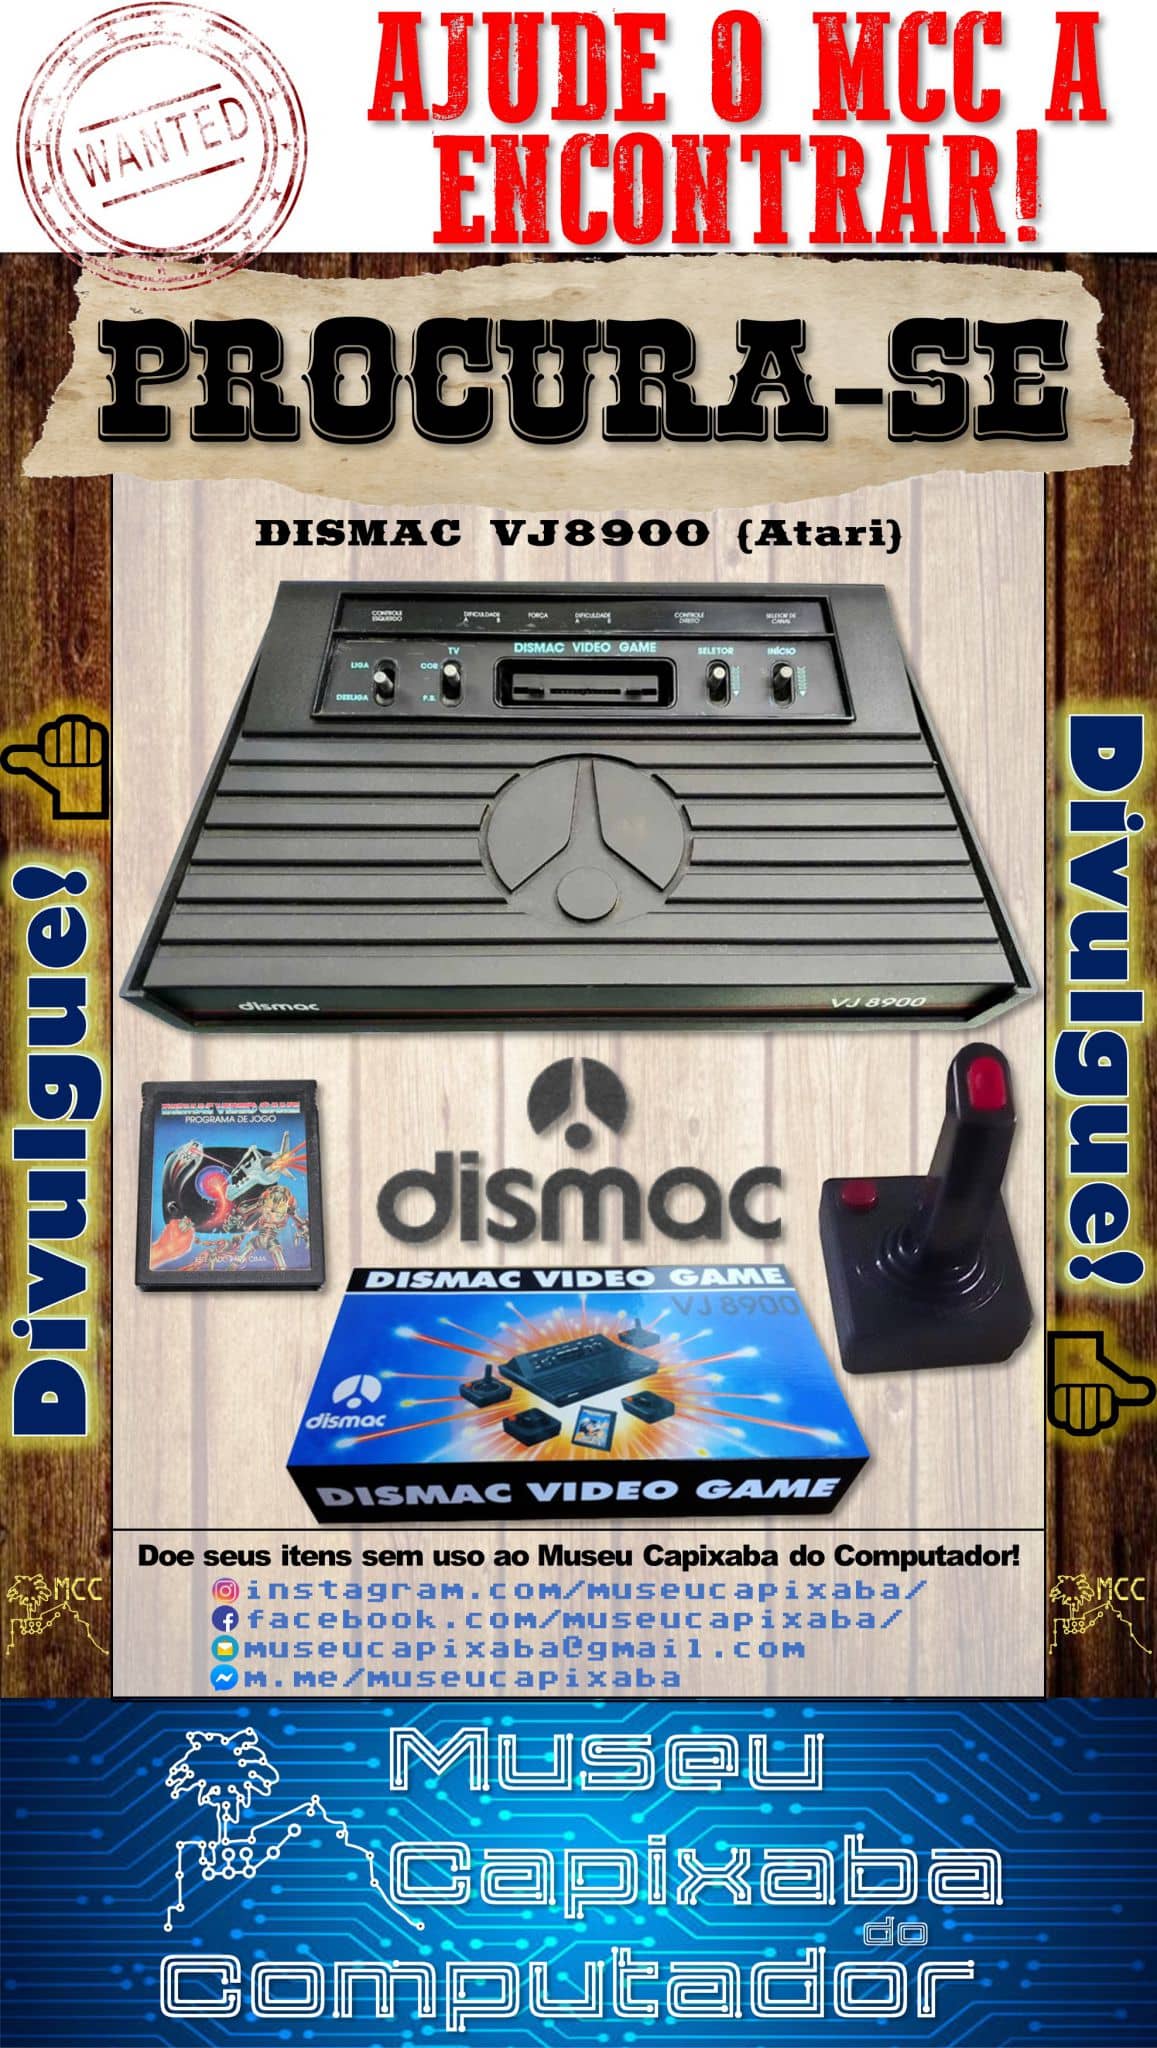 Dismac VJ 8900